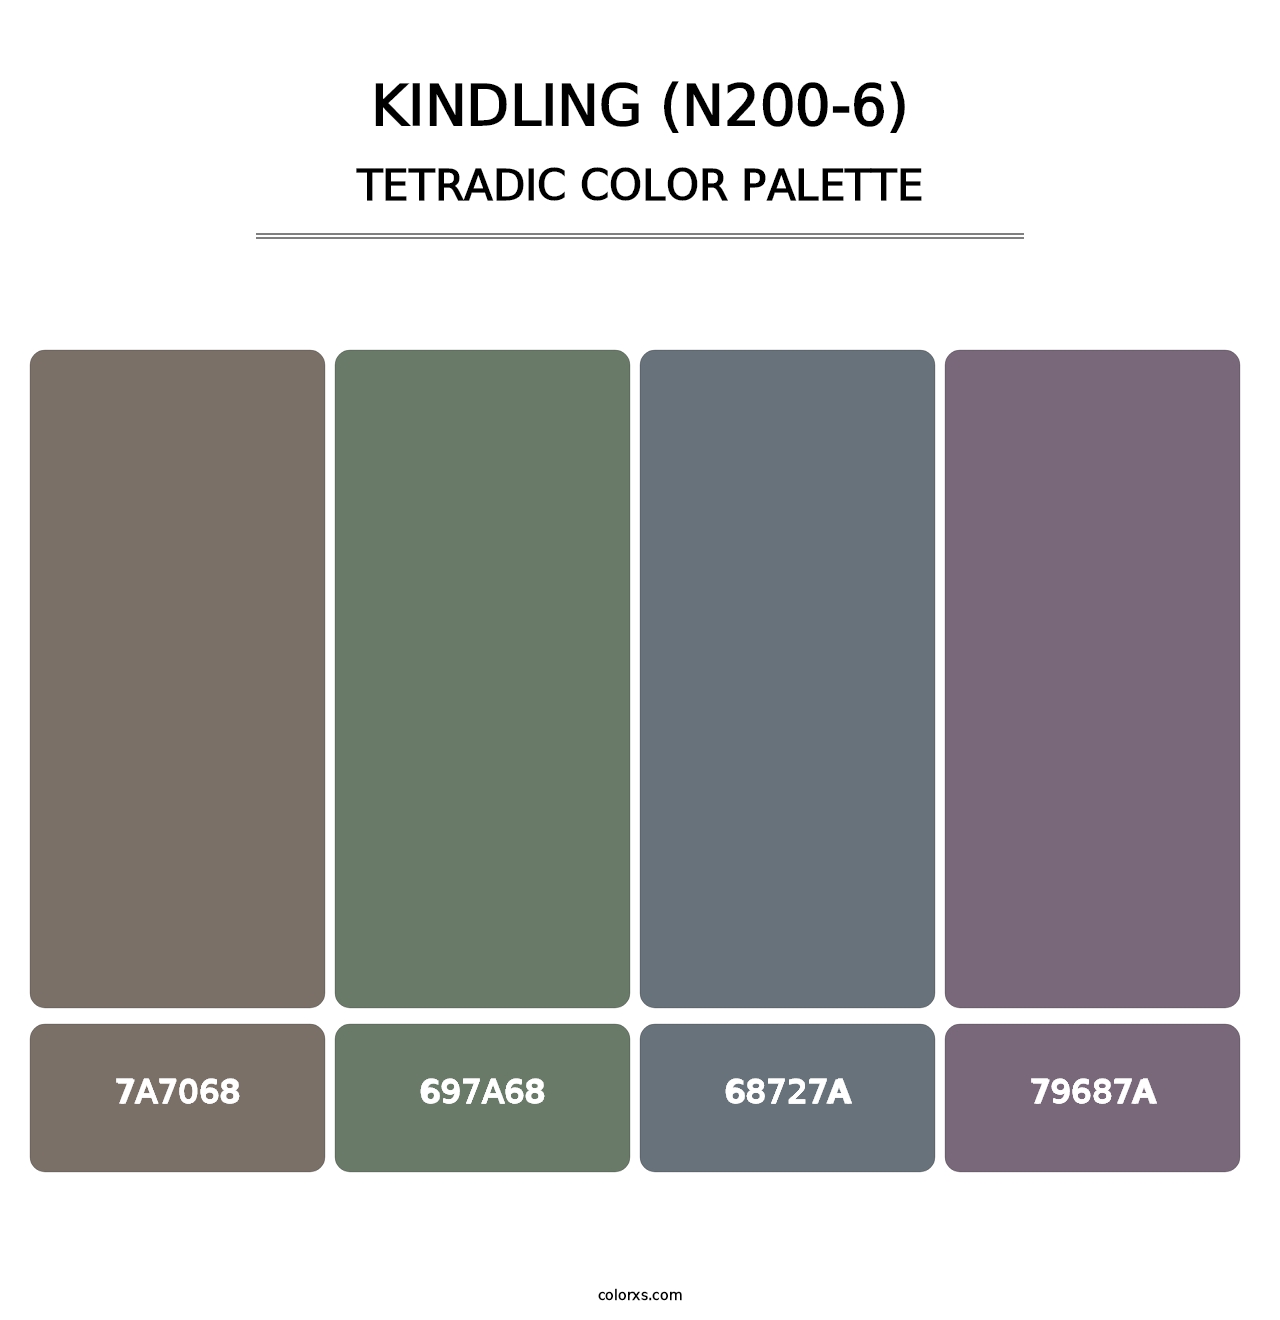 Kindling (N200-6) - Tetradic Color Palette